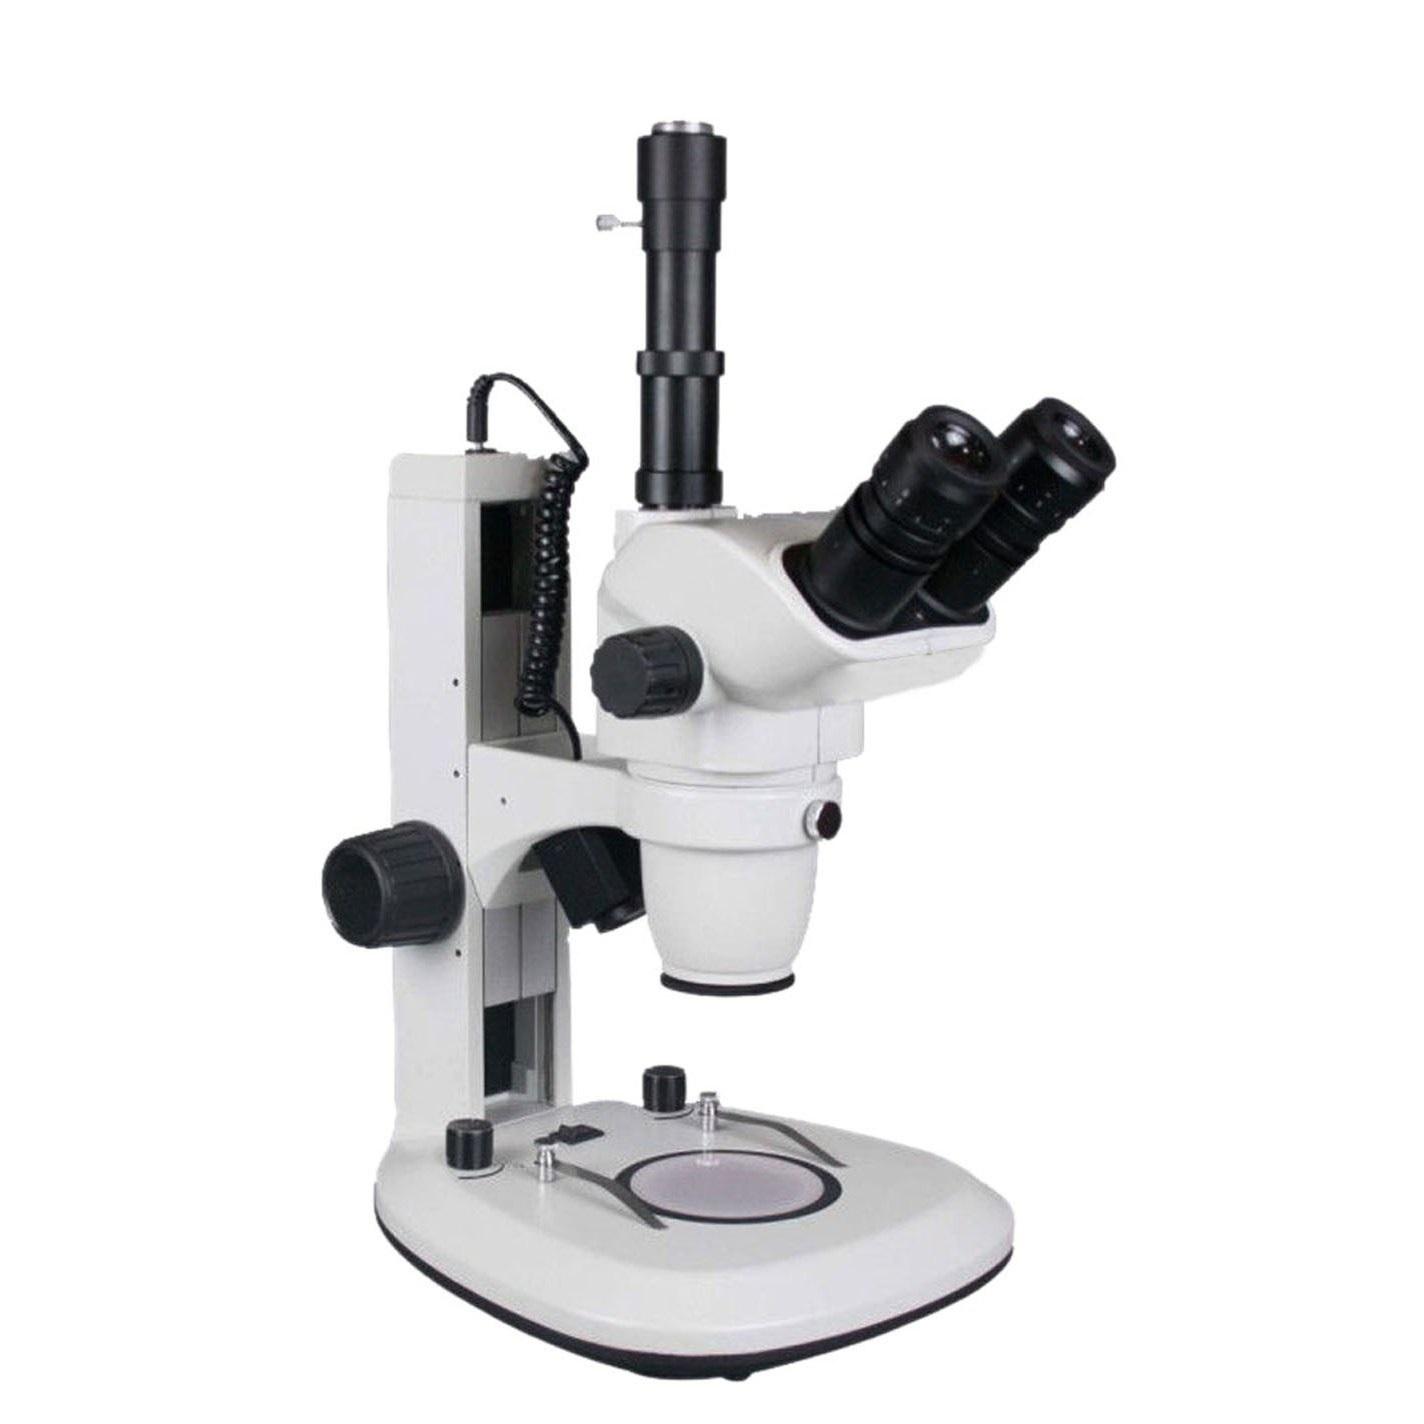 Advanced Stereo Microscope (15X & 30X Magnification)